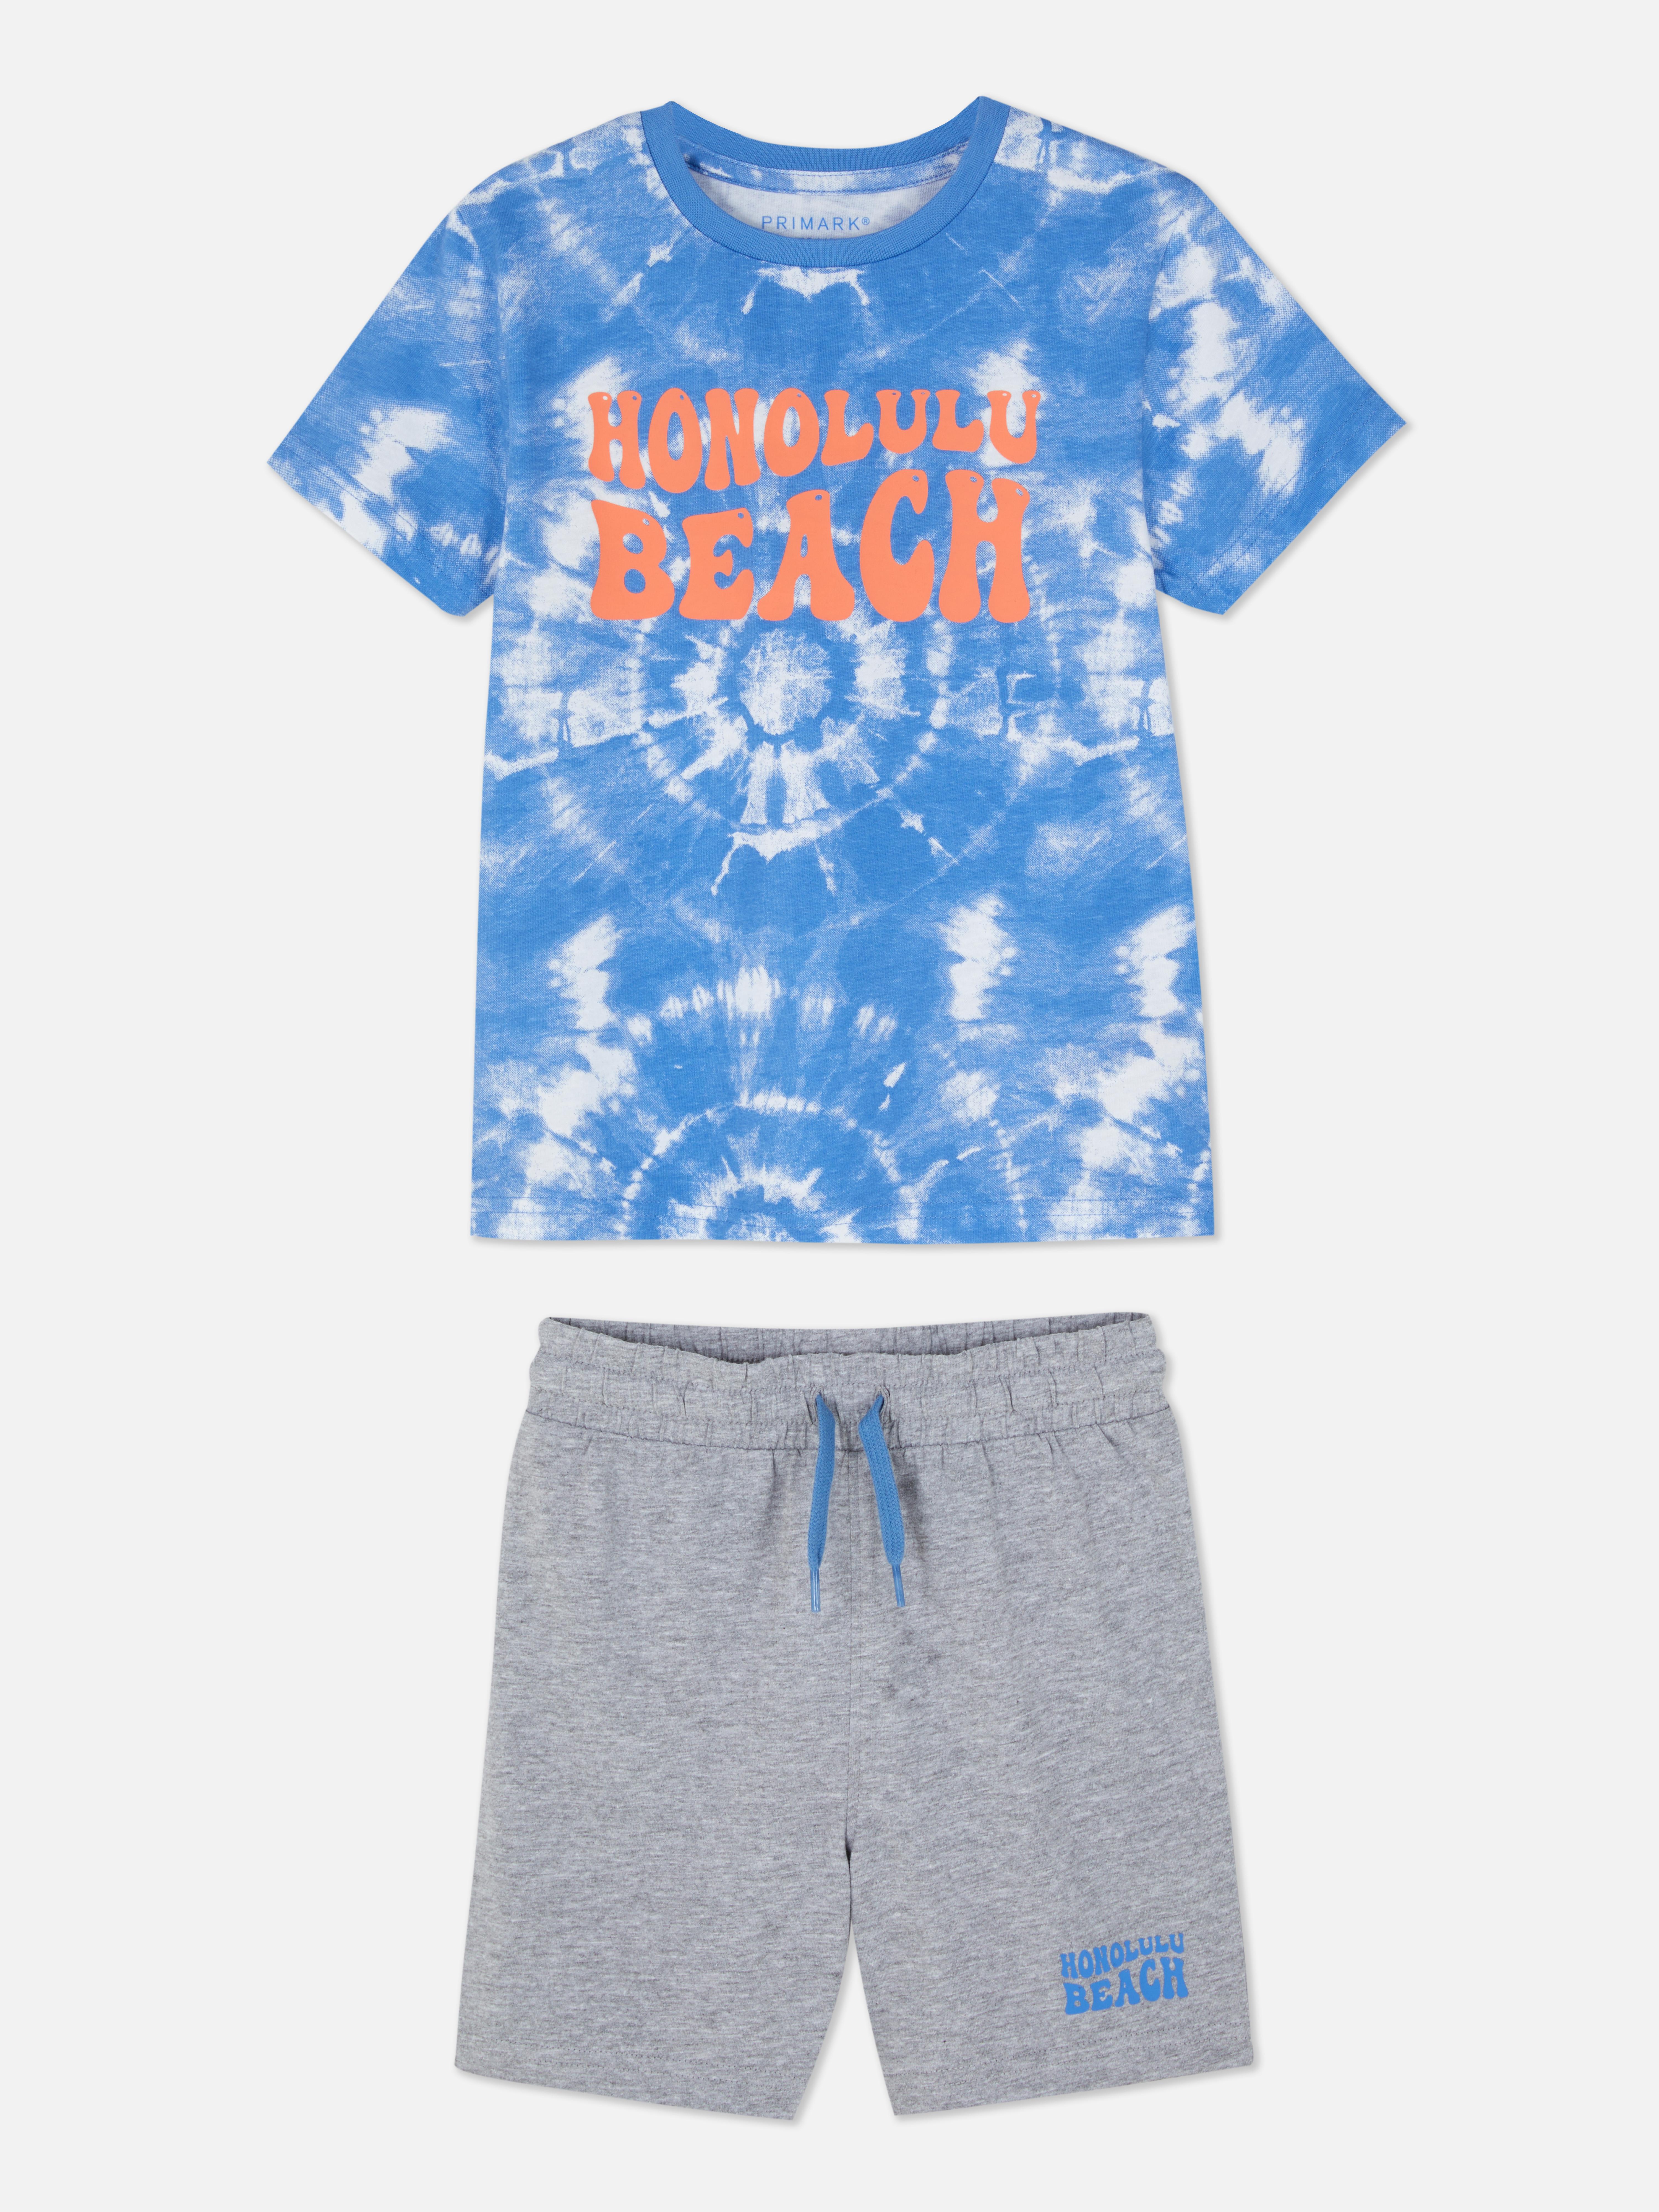 Honolulu Beach T-Shirt und Shorts im Set